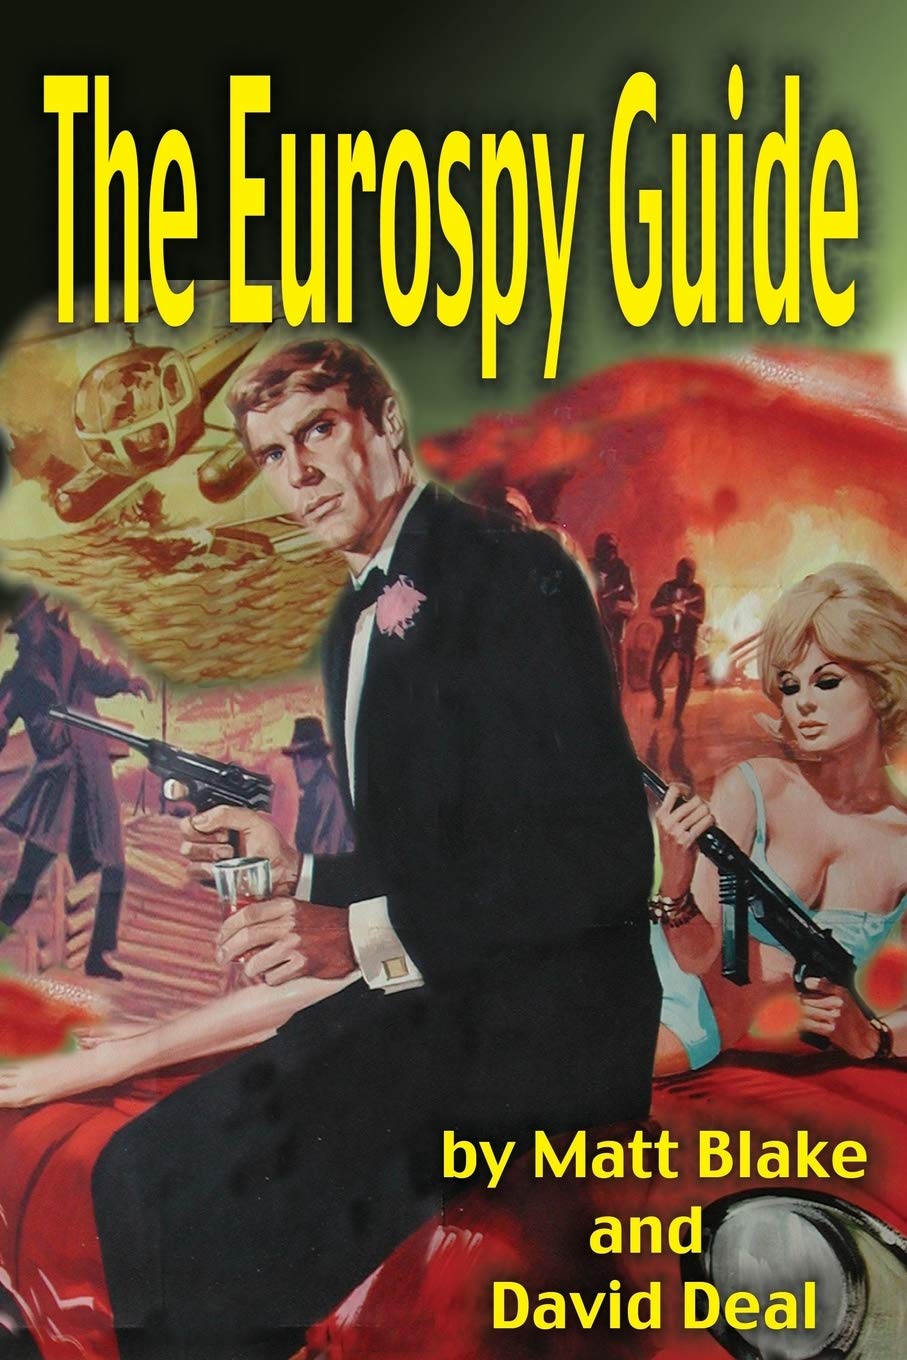 The Eurospy Guide book cover